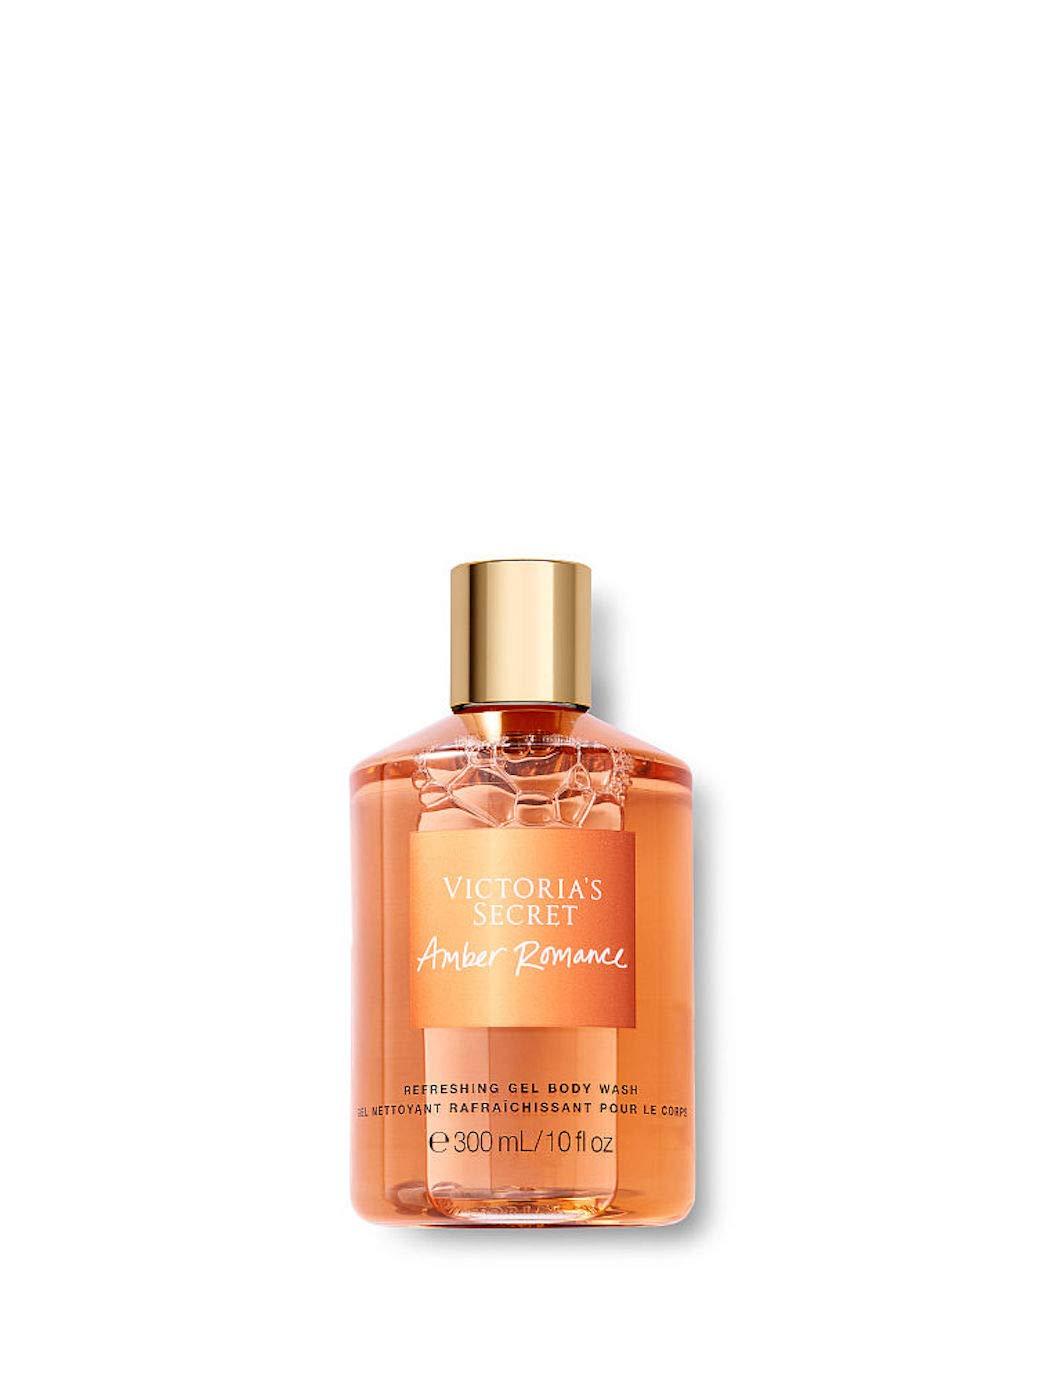 Victoria's Secret Refreshing Gel Body Wash Shower Gel 10 oz (Amber Romance)